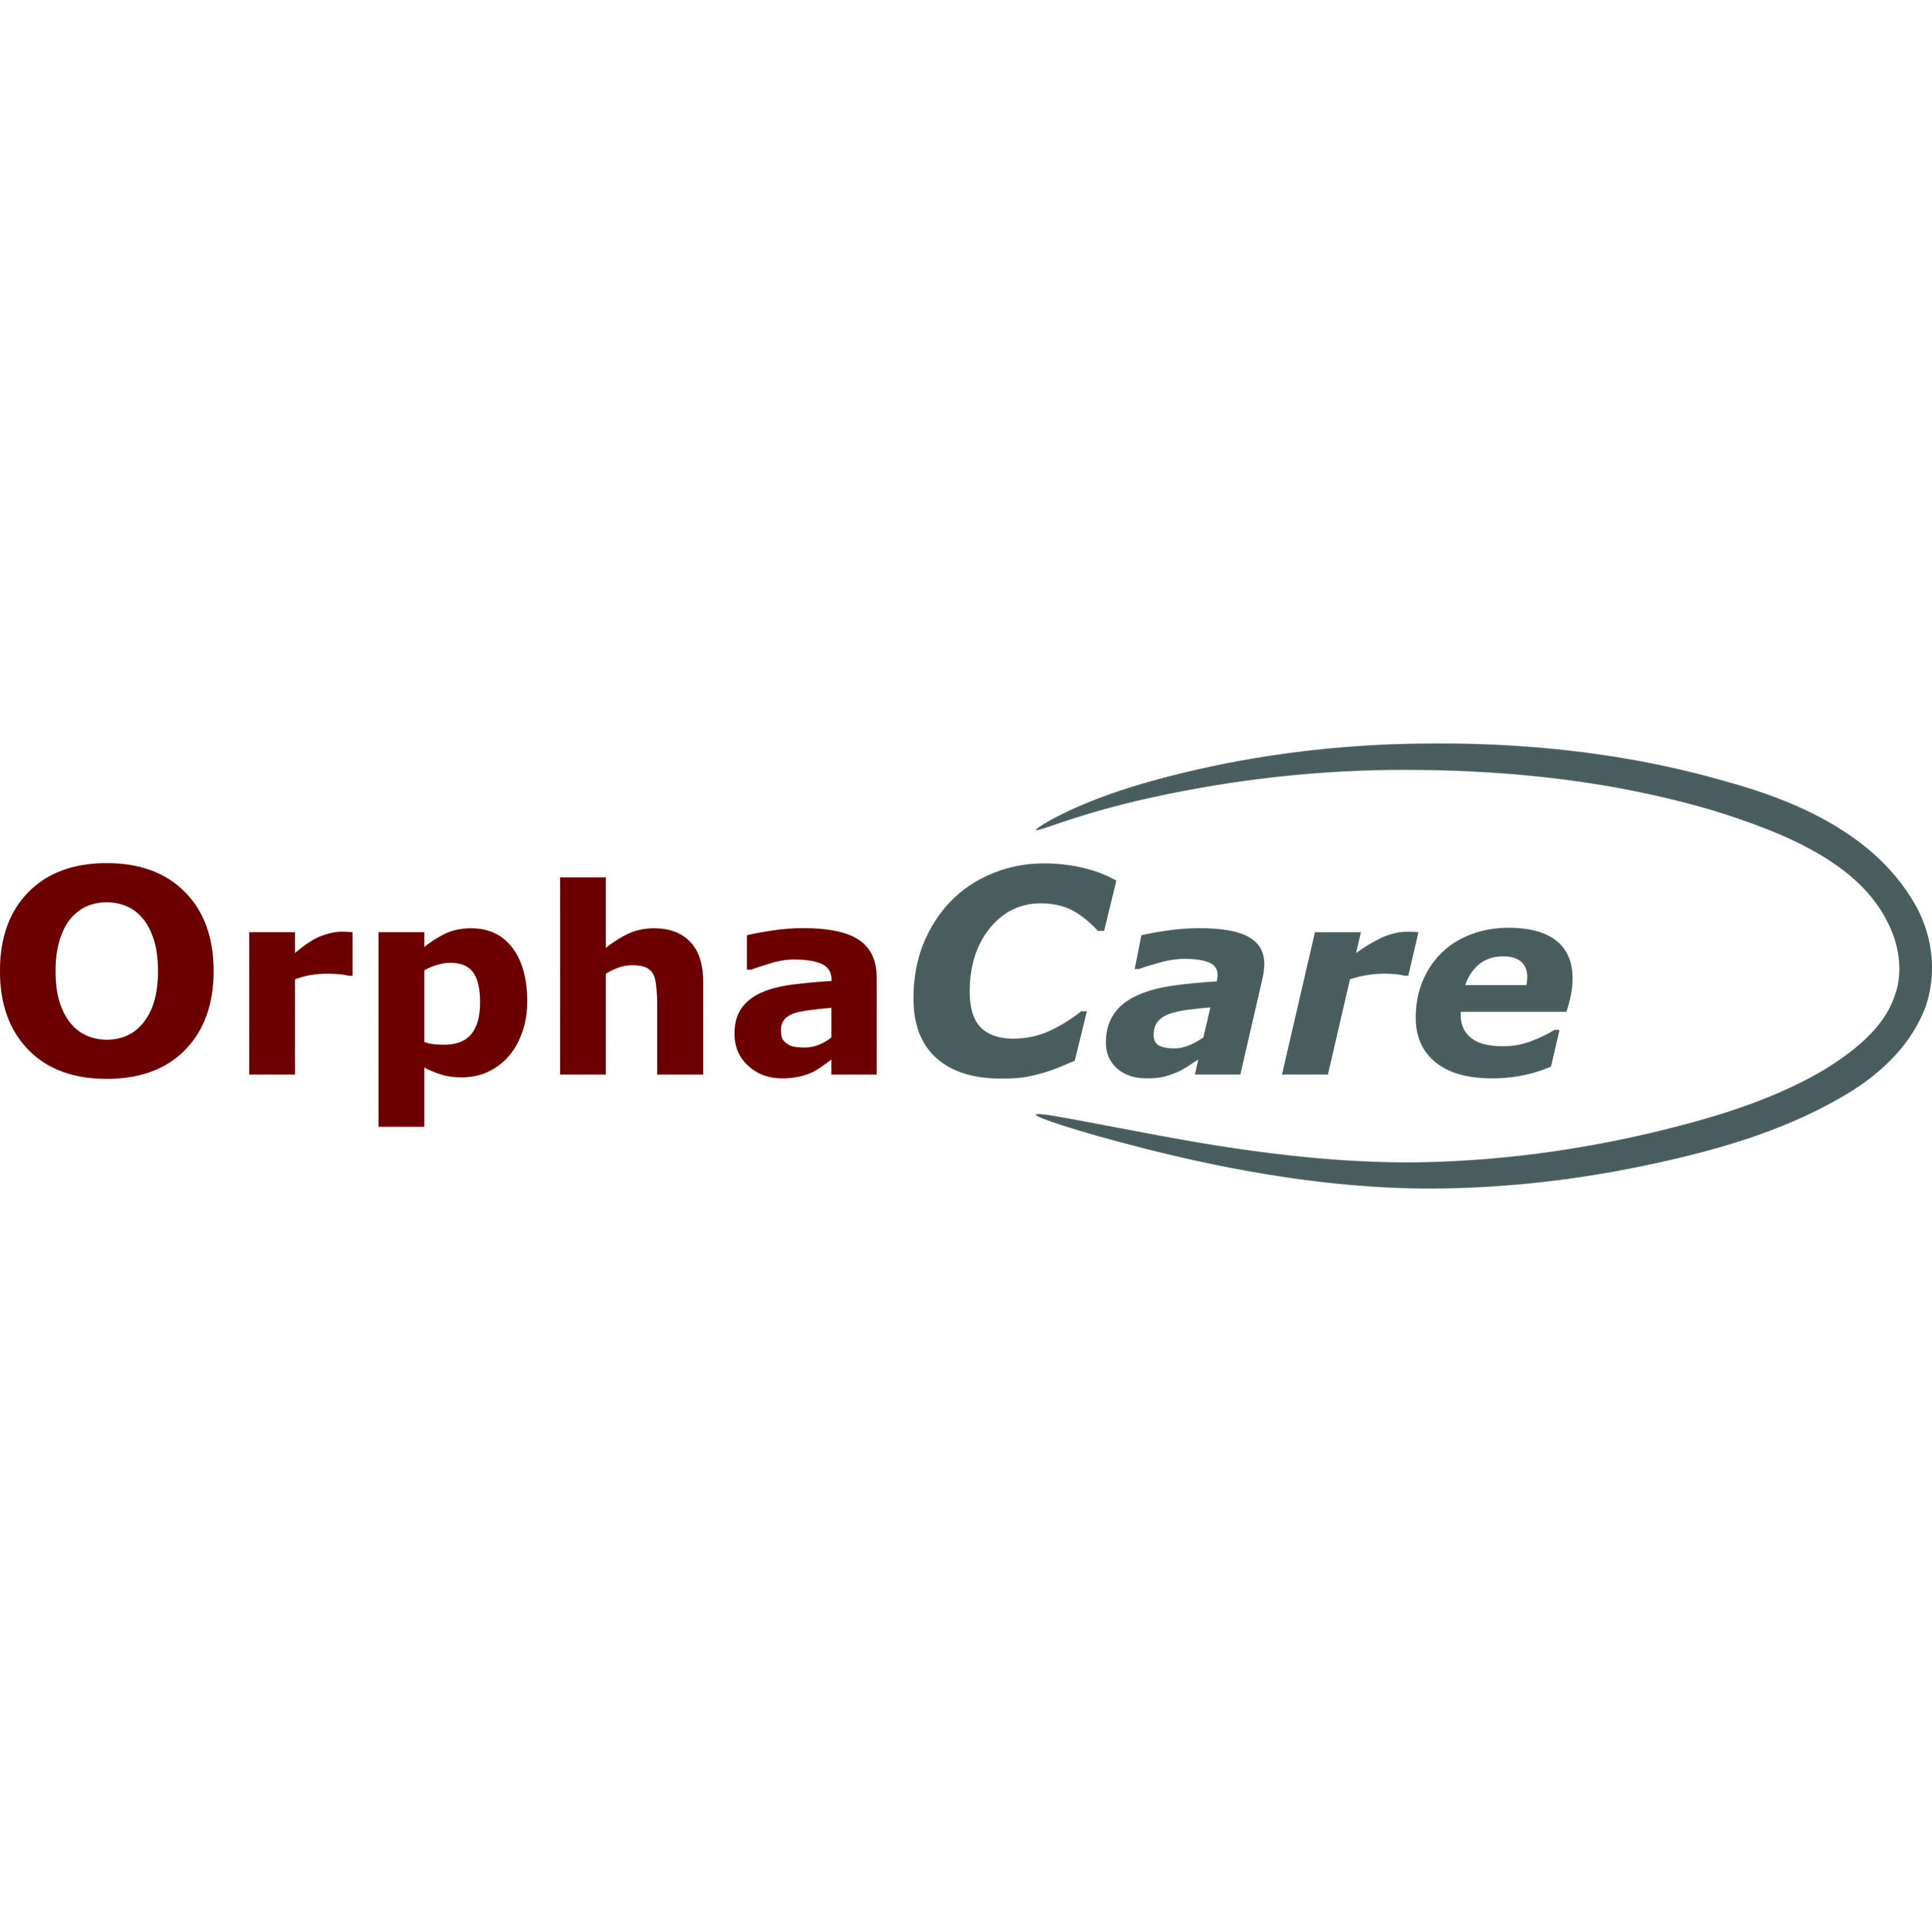 OrphaCare GmbH